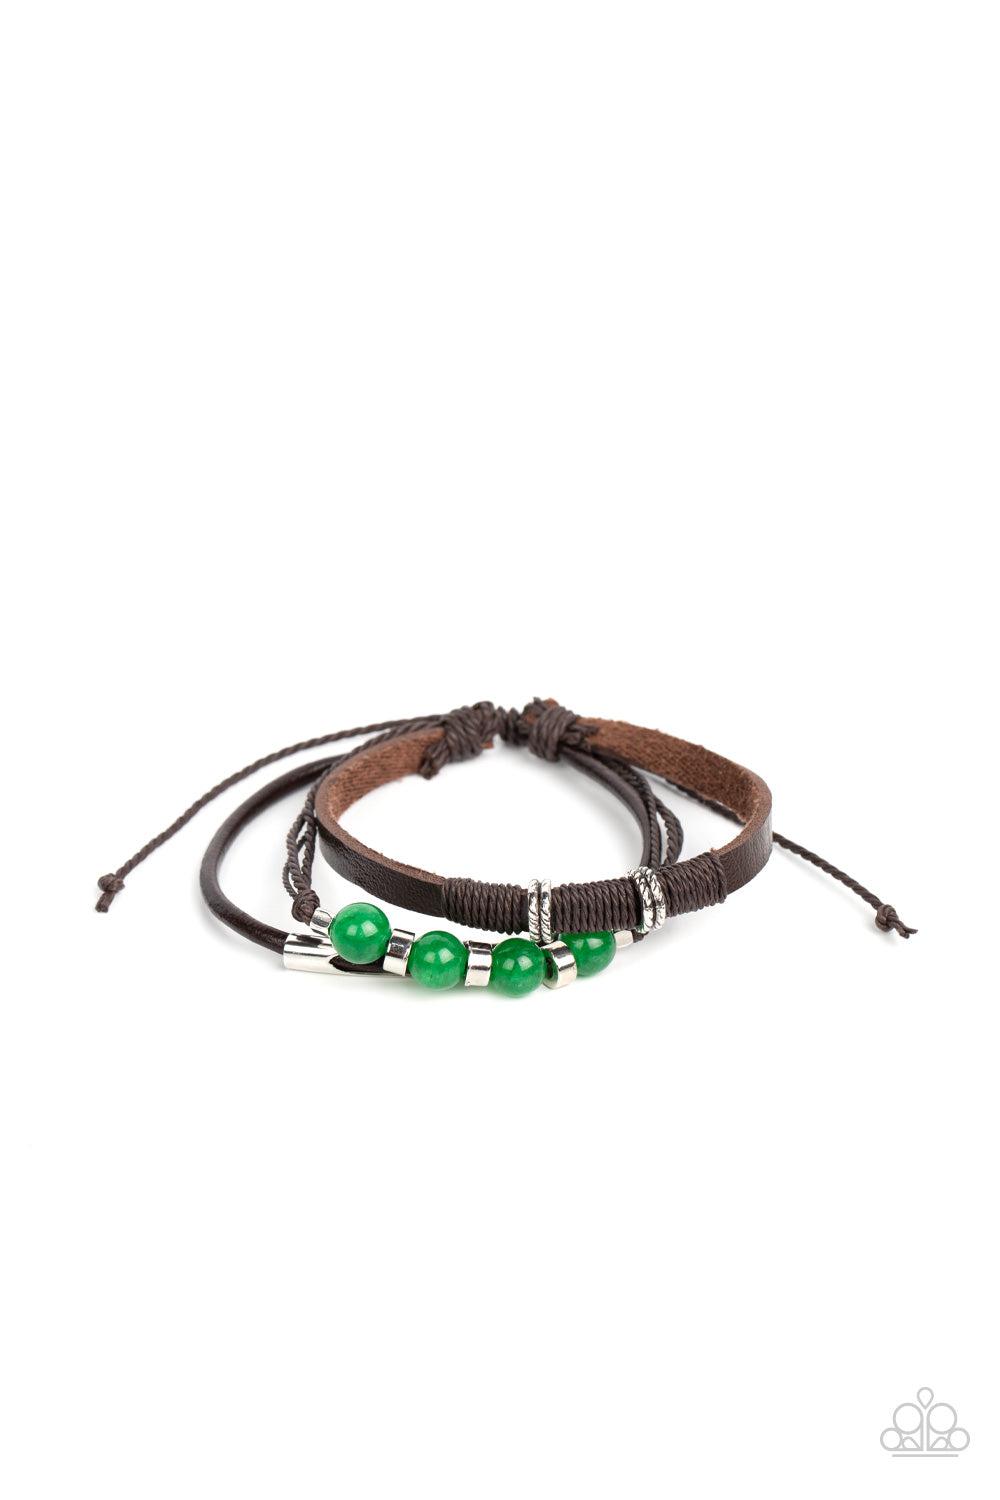 Amplified Aloha Green Urban Slide Bracelet - Paparazzi Accessories- lightbox - CarasShop.com - $5 Jewelry by Cara Jewels